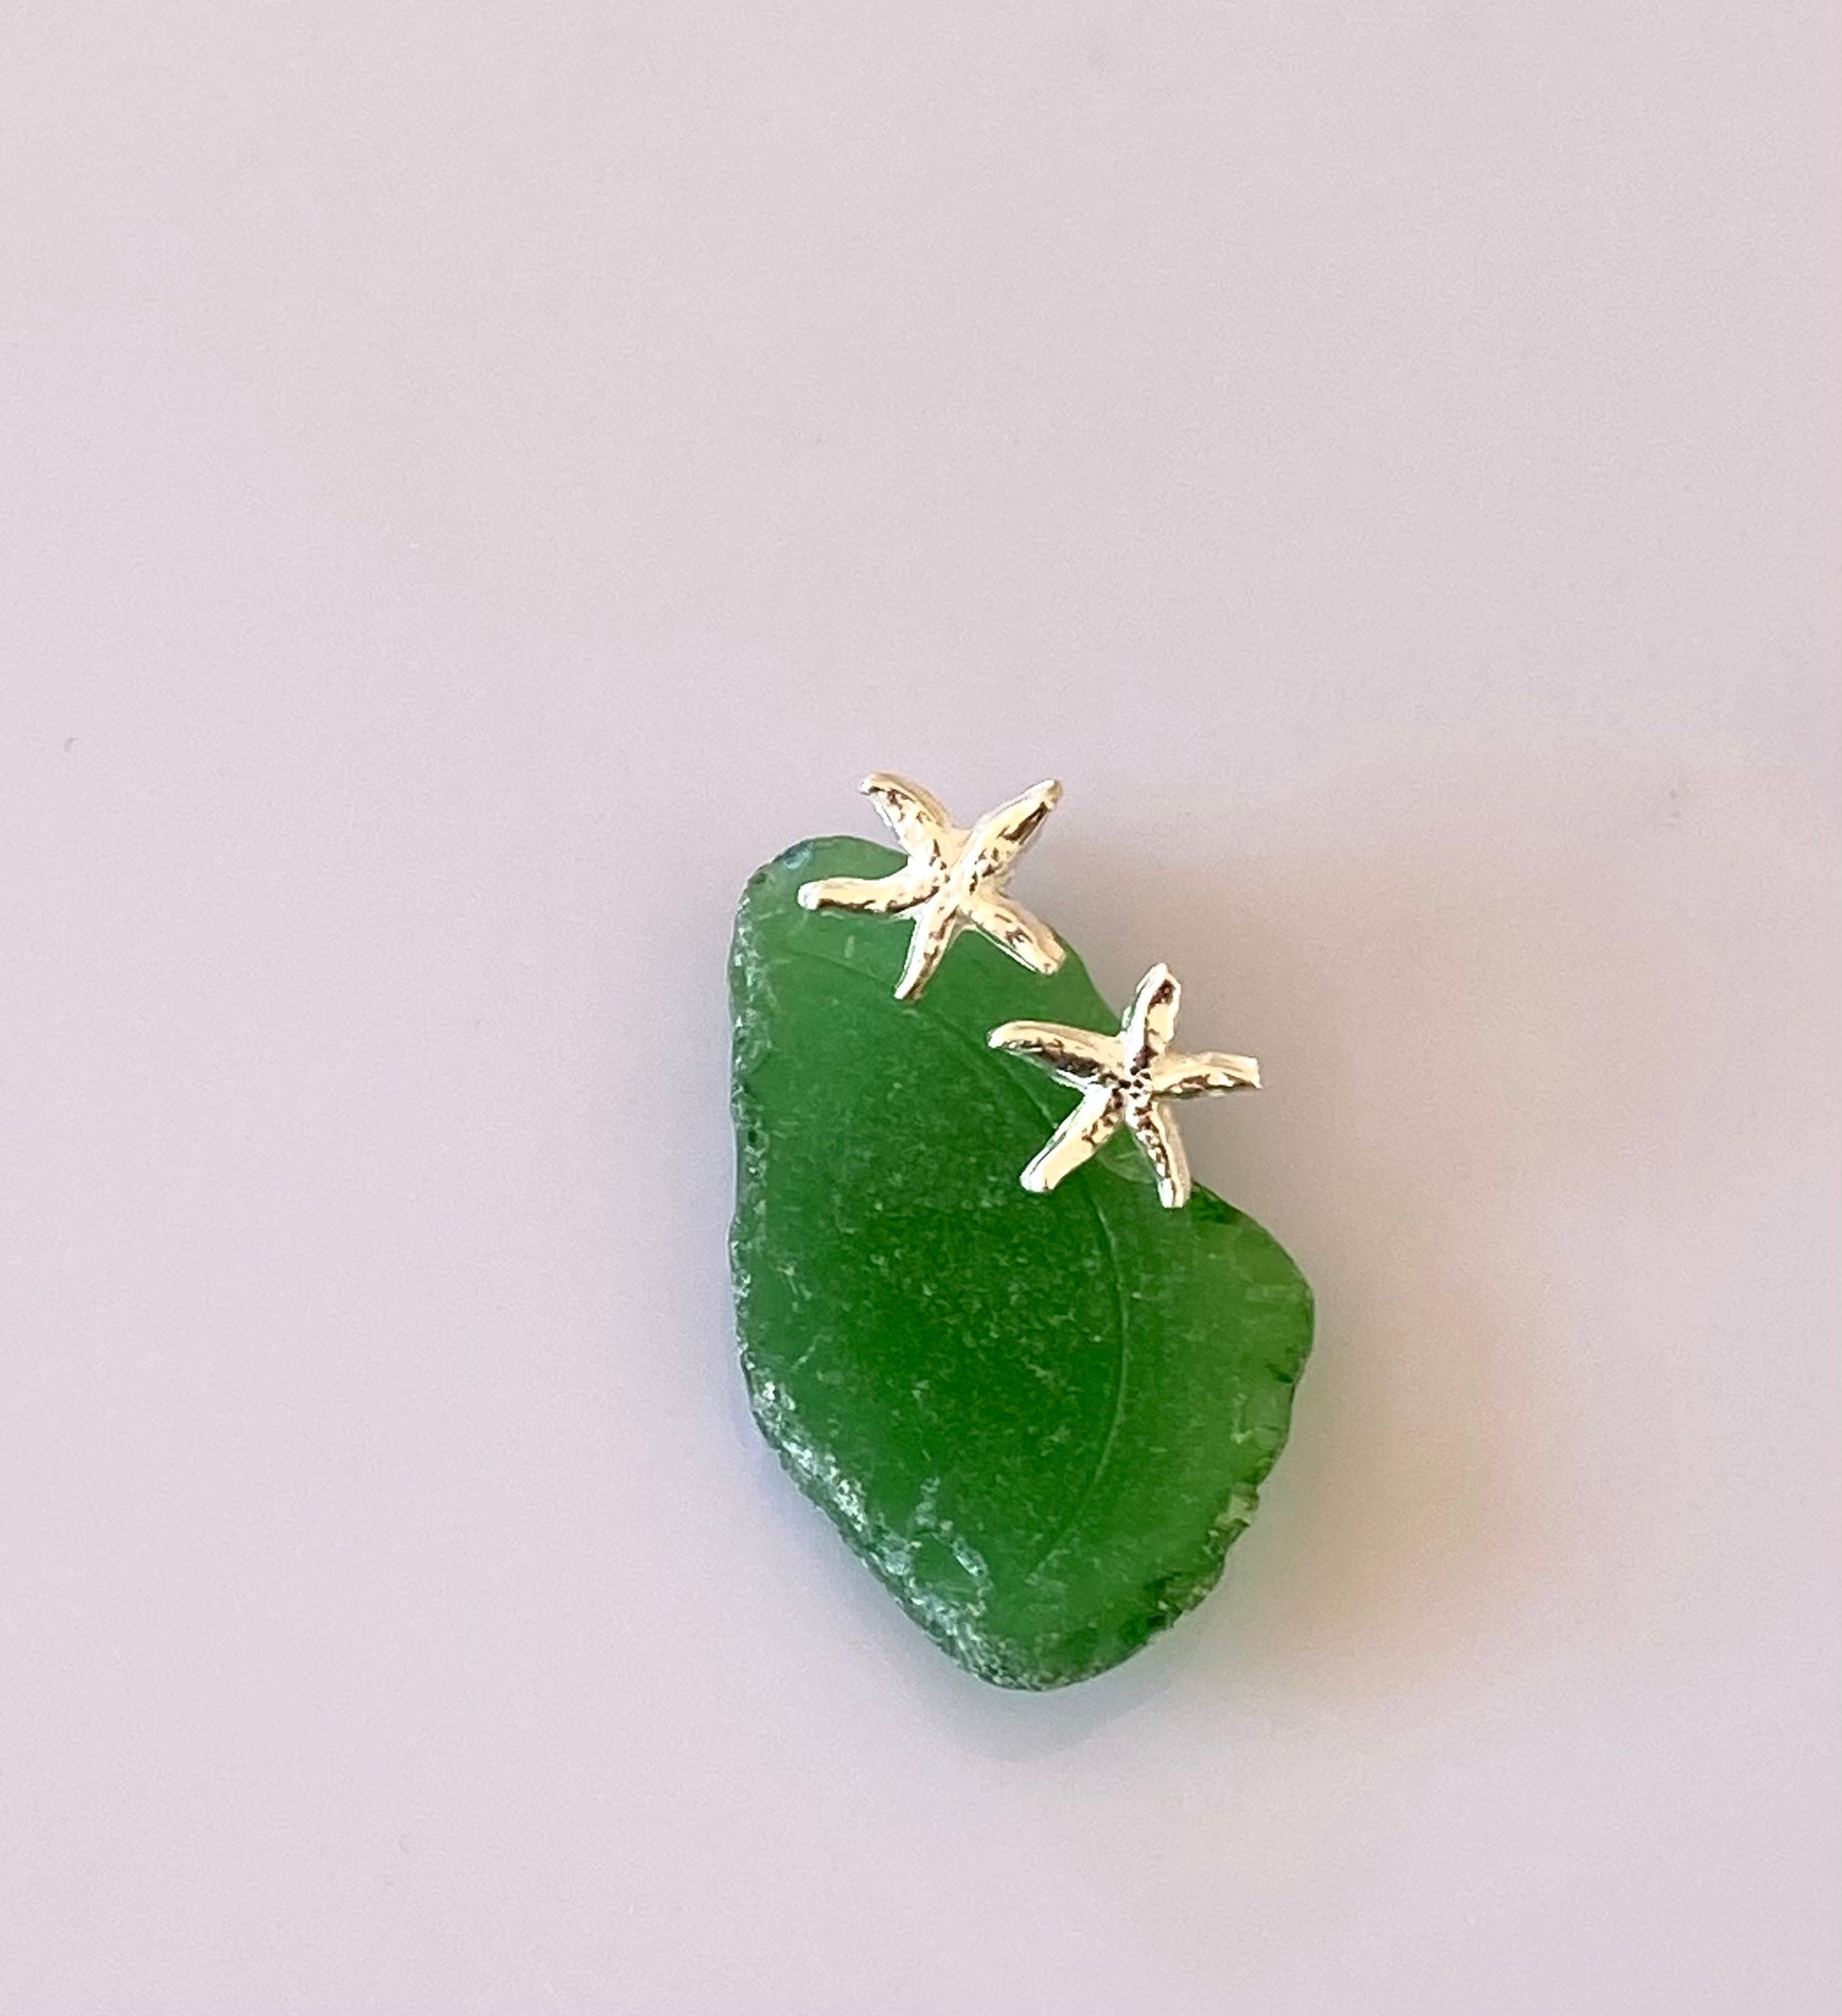 Silver Starfish earrings - Love Beach Beads